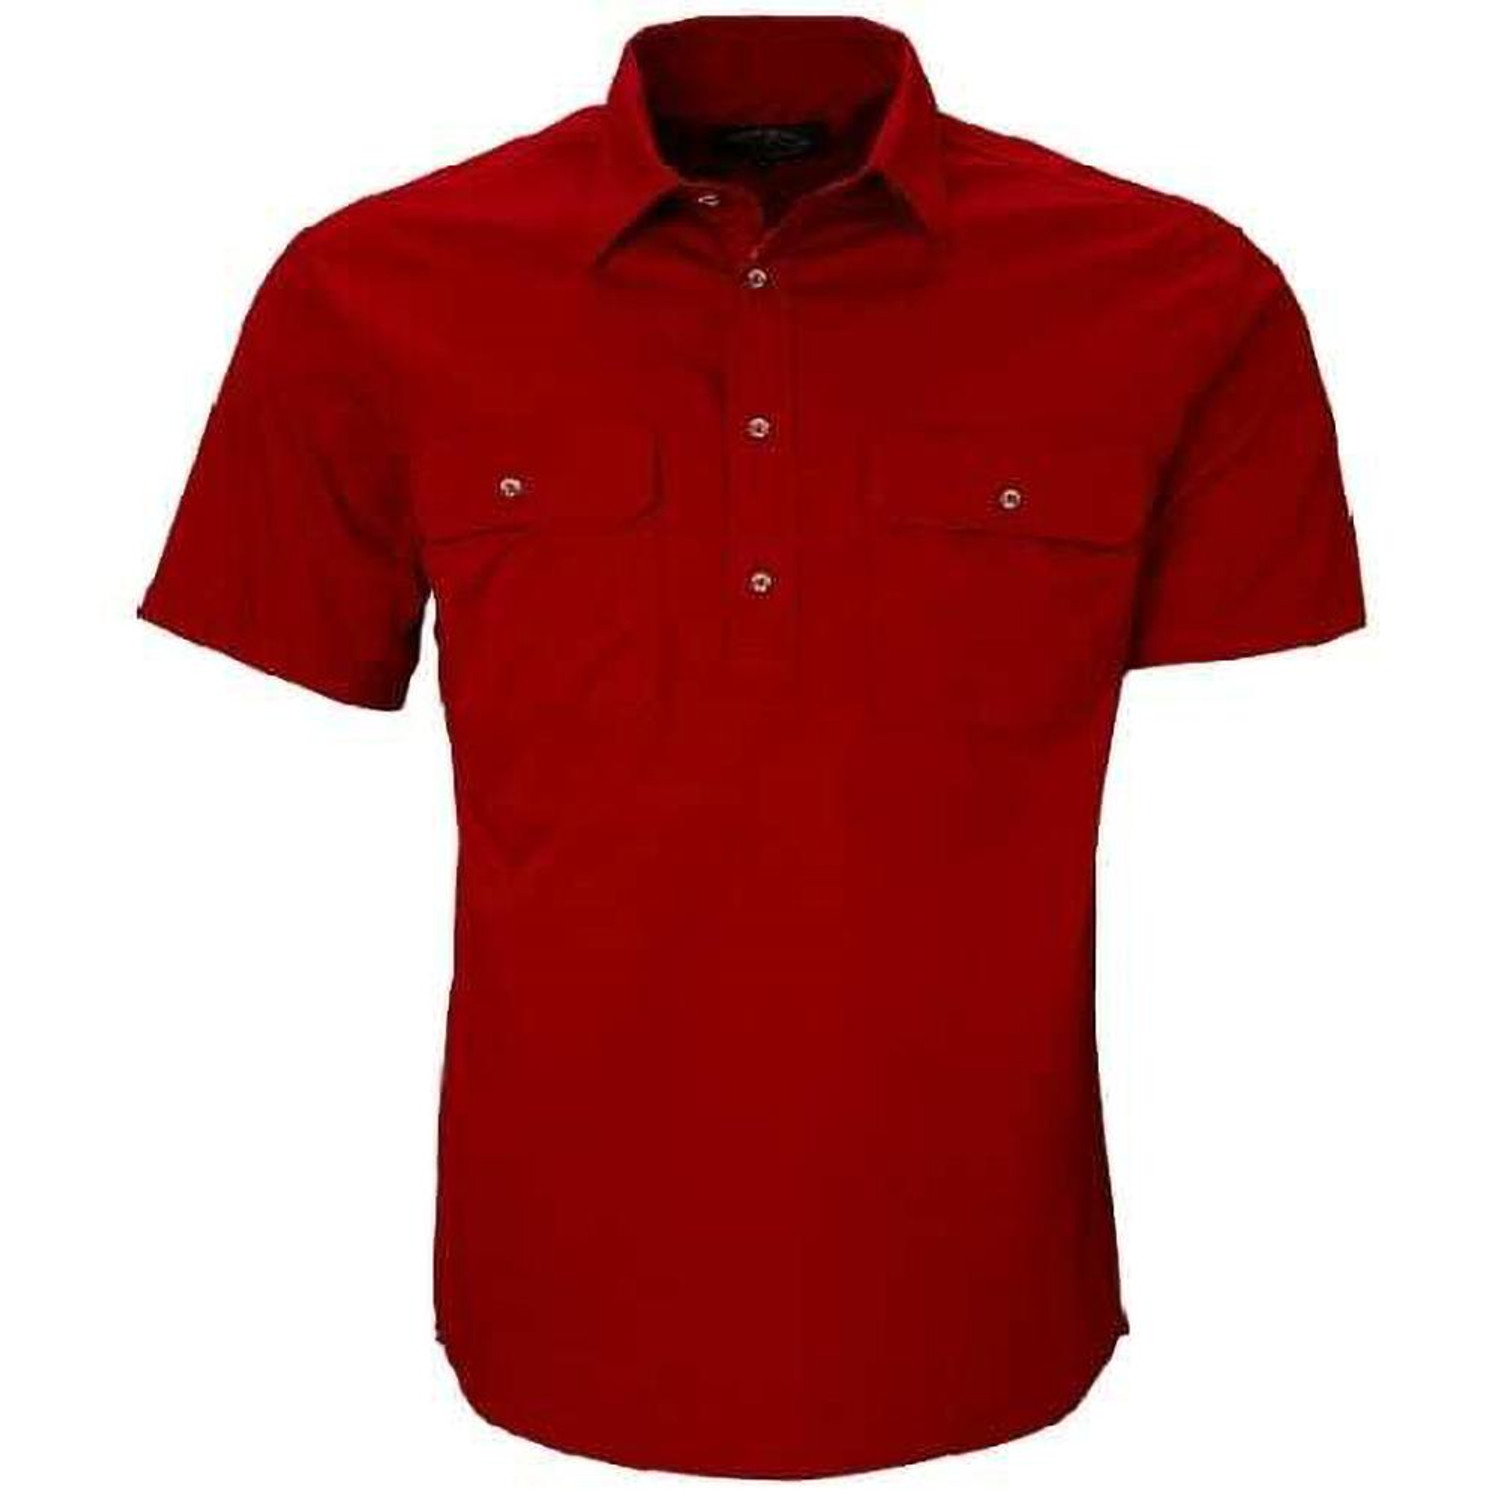 Ritemate RM200CFS Pilbara Mens Closed Front Short Sleeve Shirt in Red Bulk Deal, Buy 4 for dollar44.95 Each